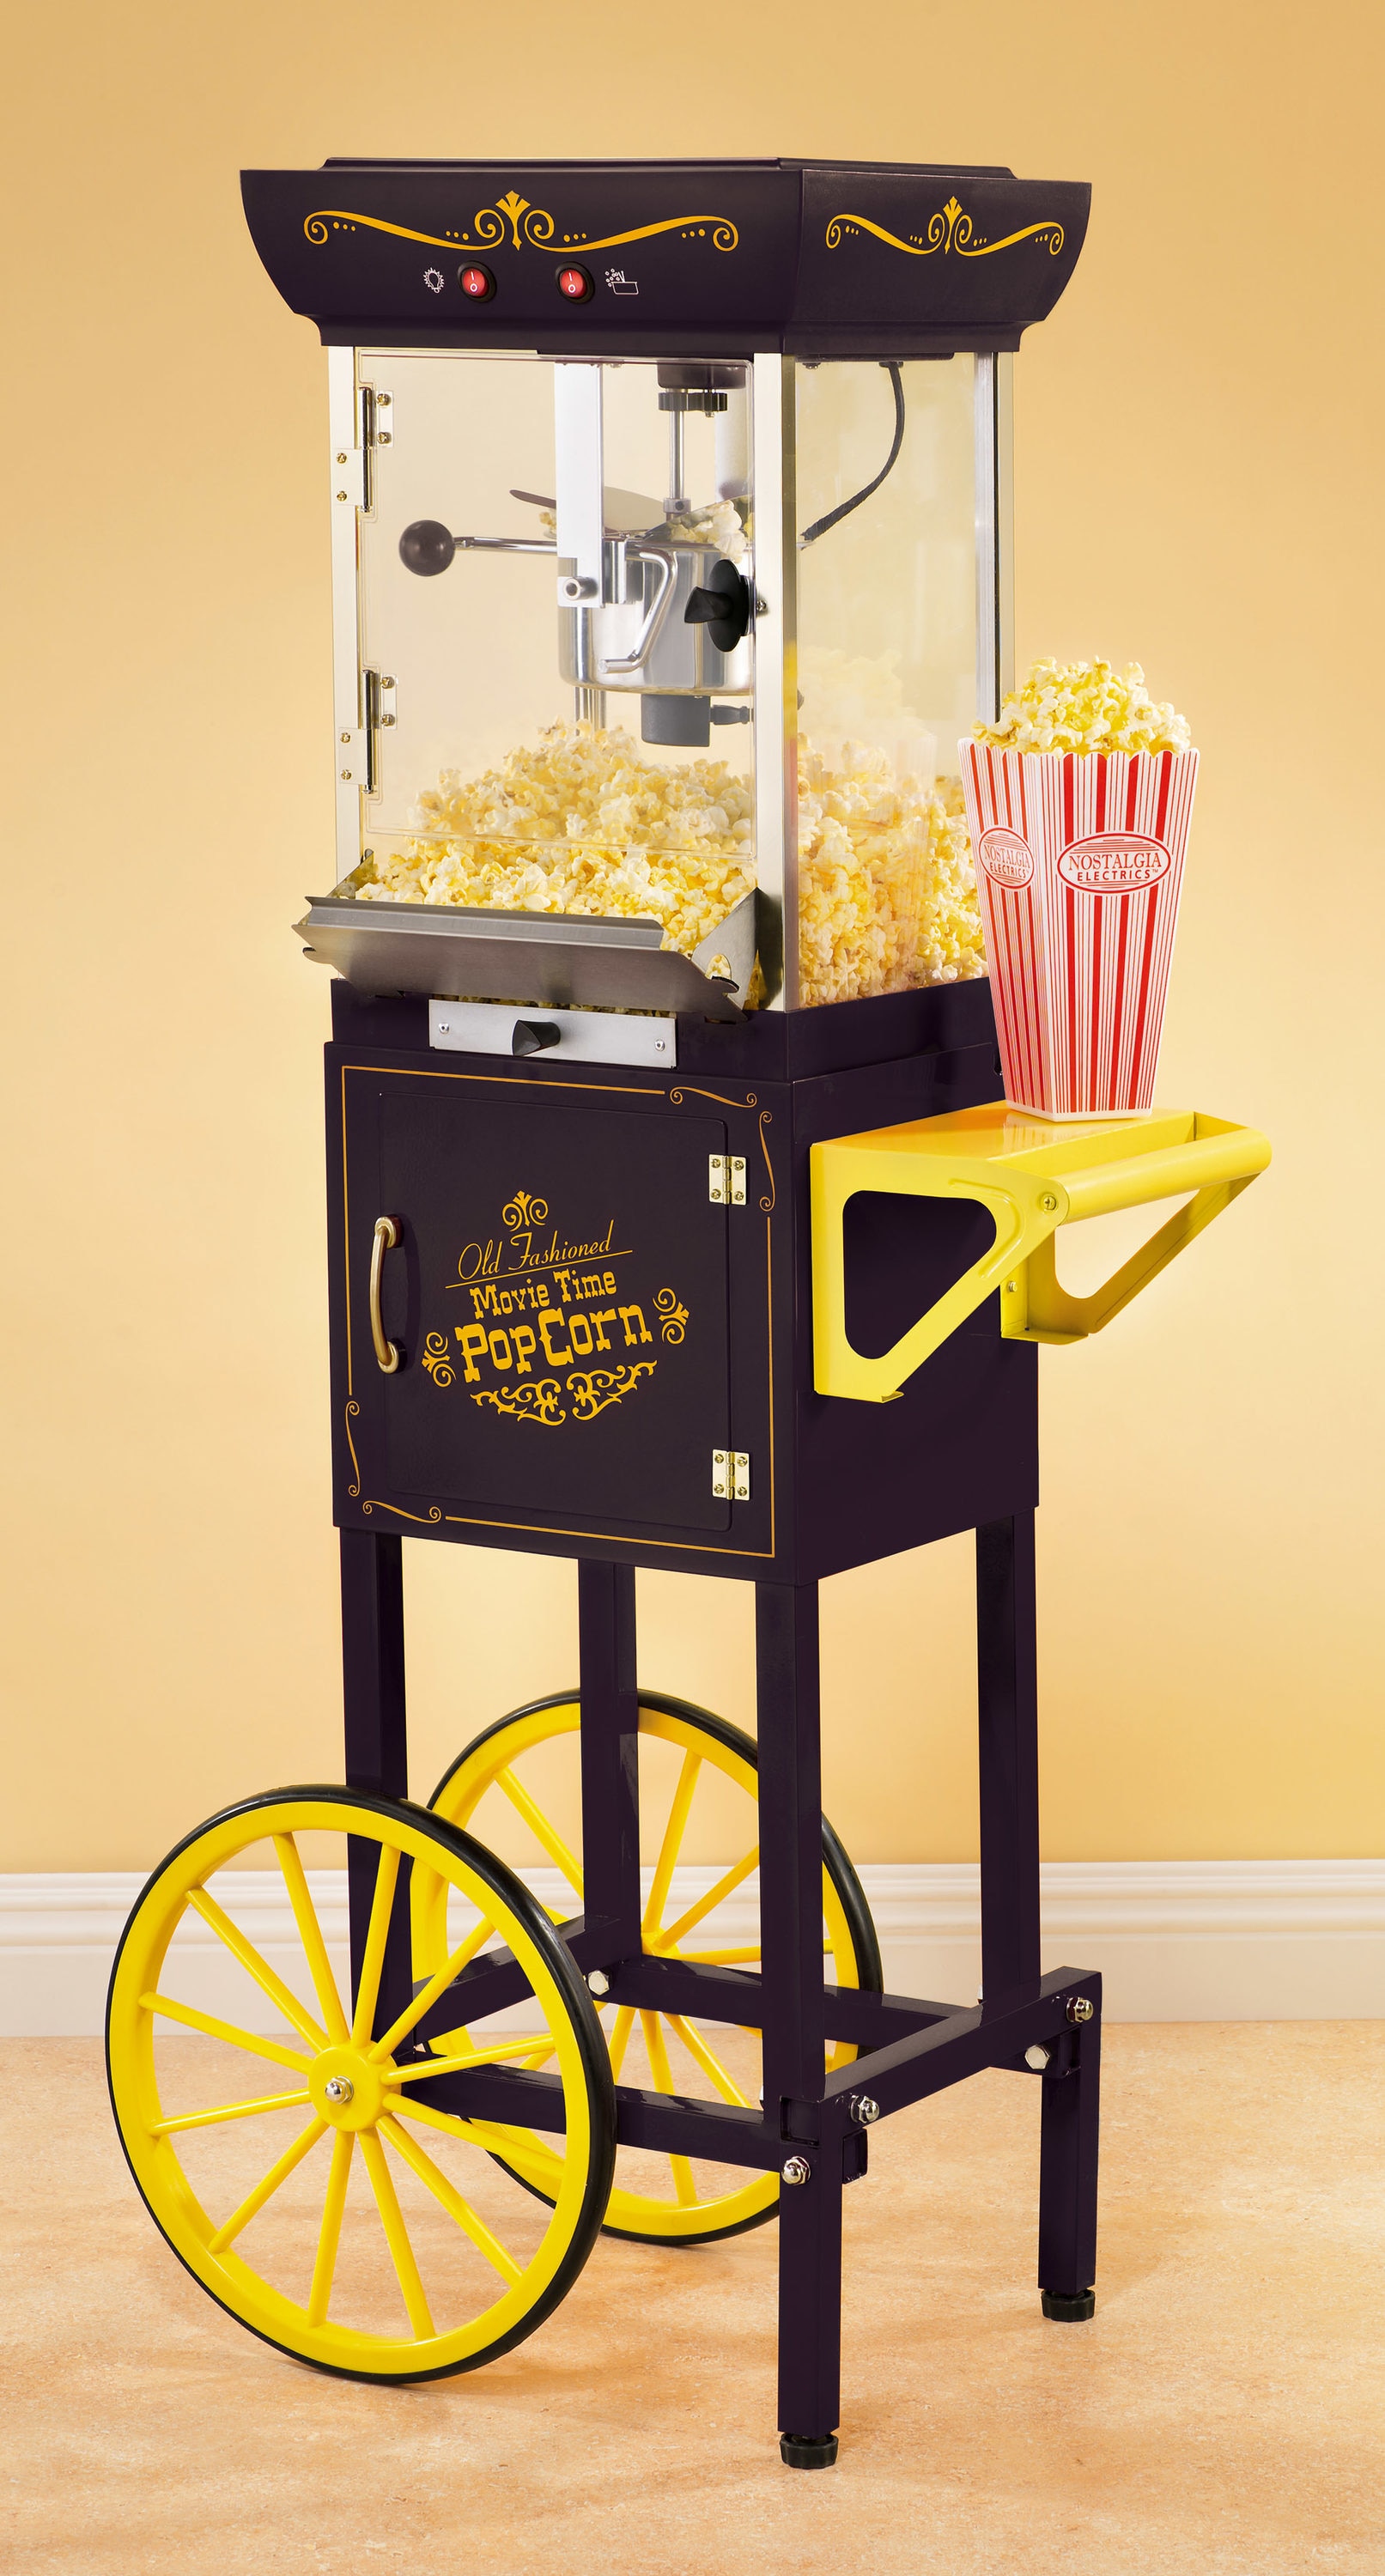 Nostalgia 0.25 Cups Oil Popcorn Machine Popcorn Maker Cart in the